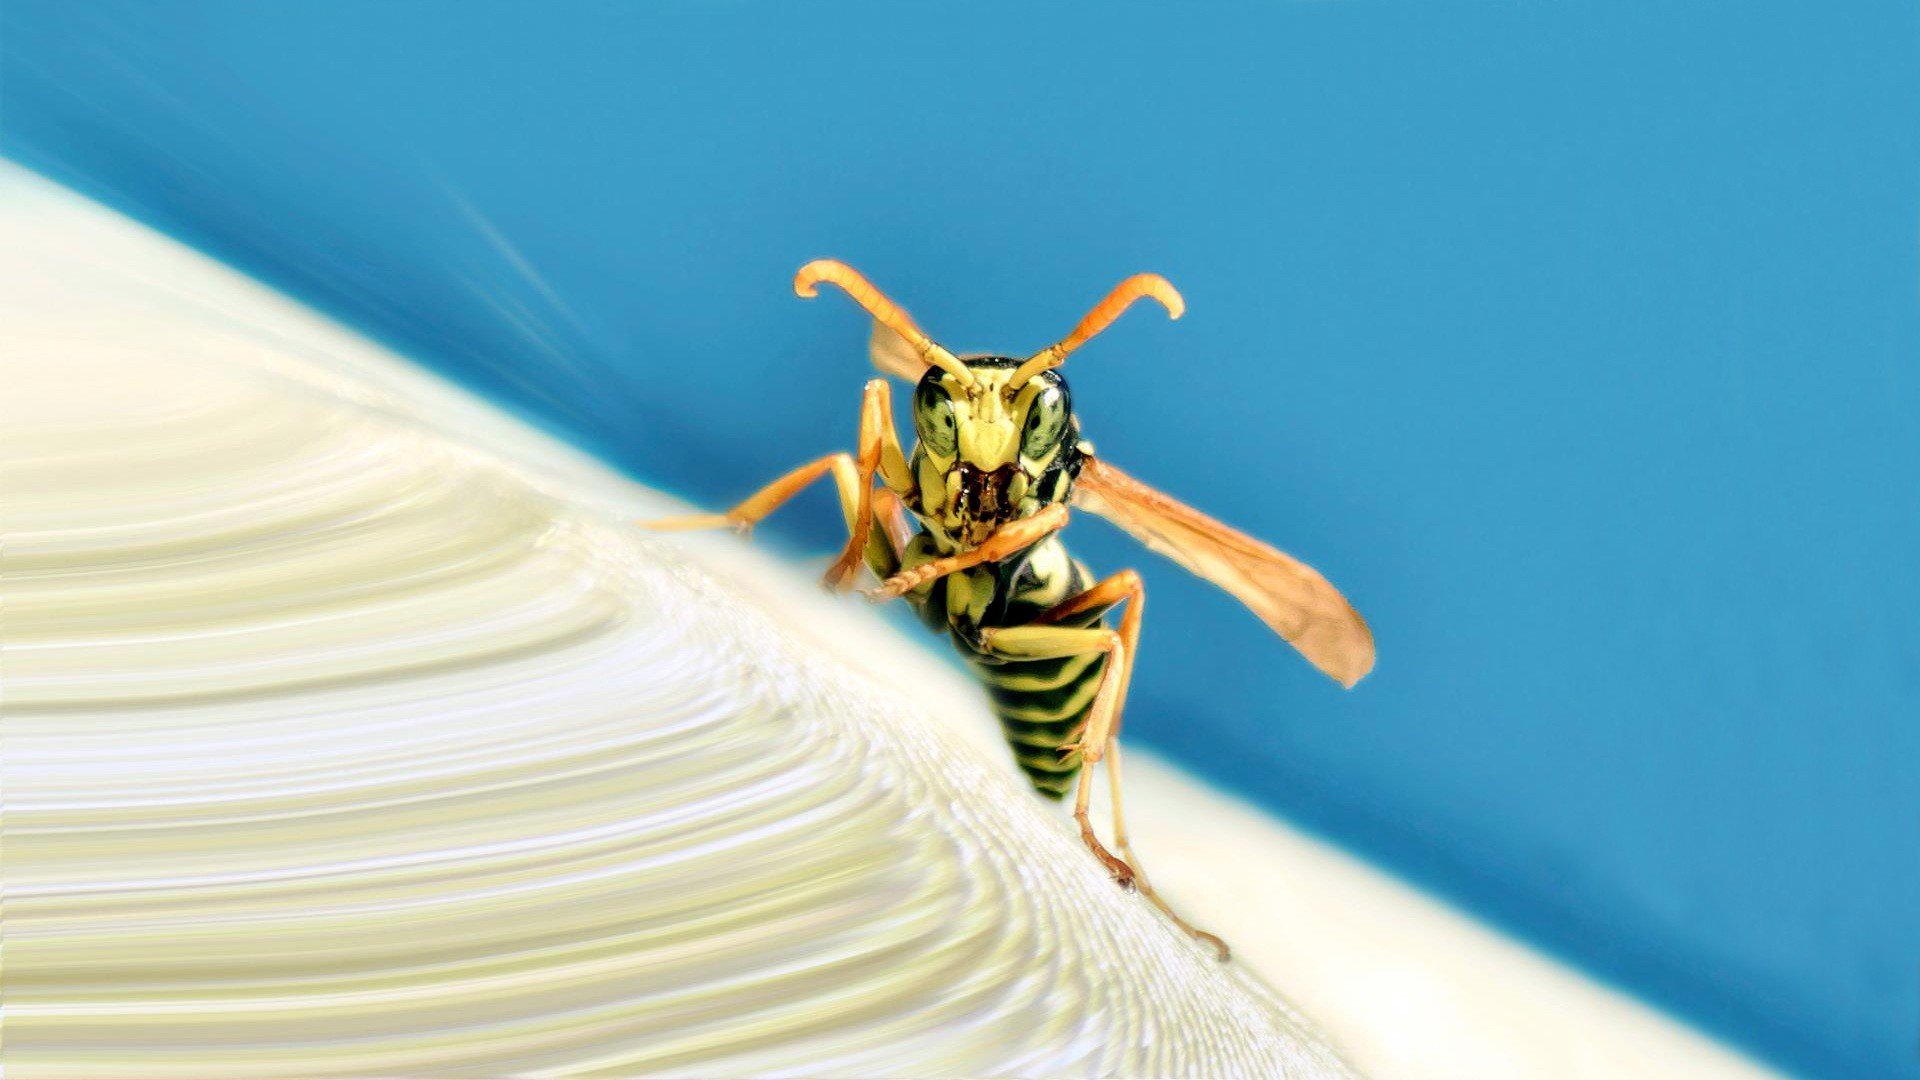 Best Wasp wallpaper ID:48148 for High Resolution hd 1920x1080 desktop